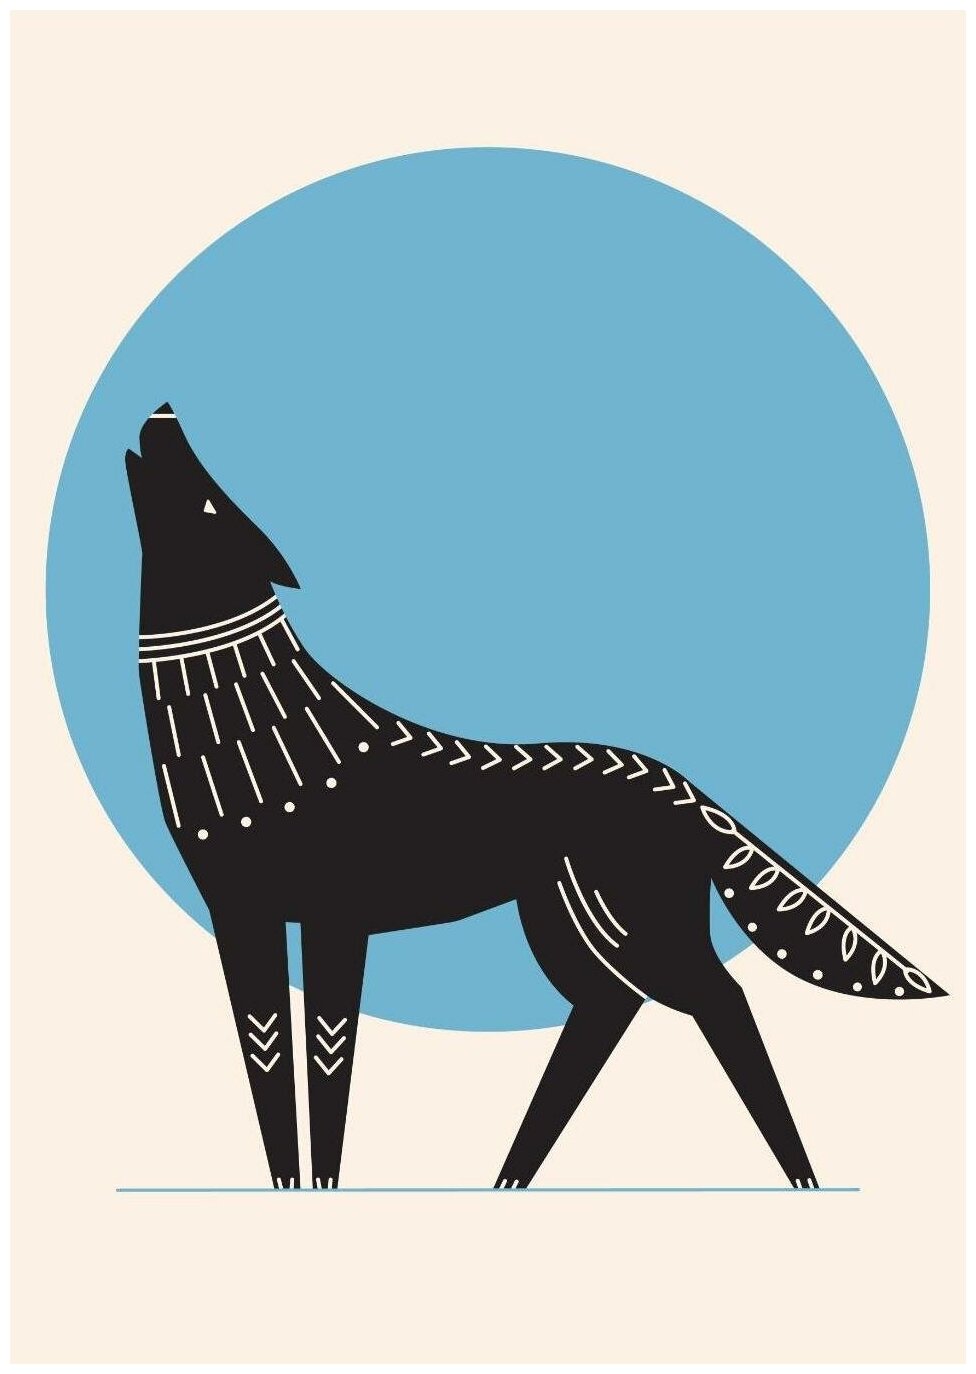 Постер / Плакат / Картина Скандинавский стиль - Одинокий волк